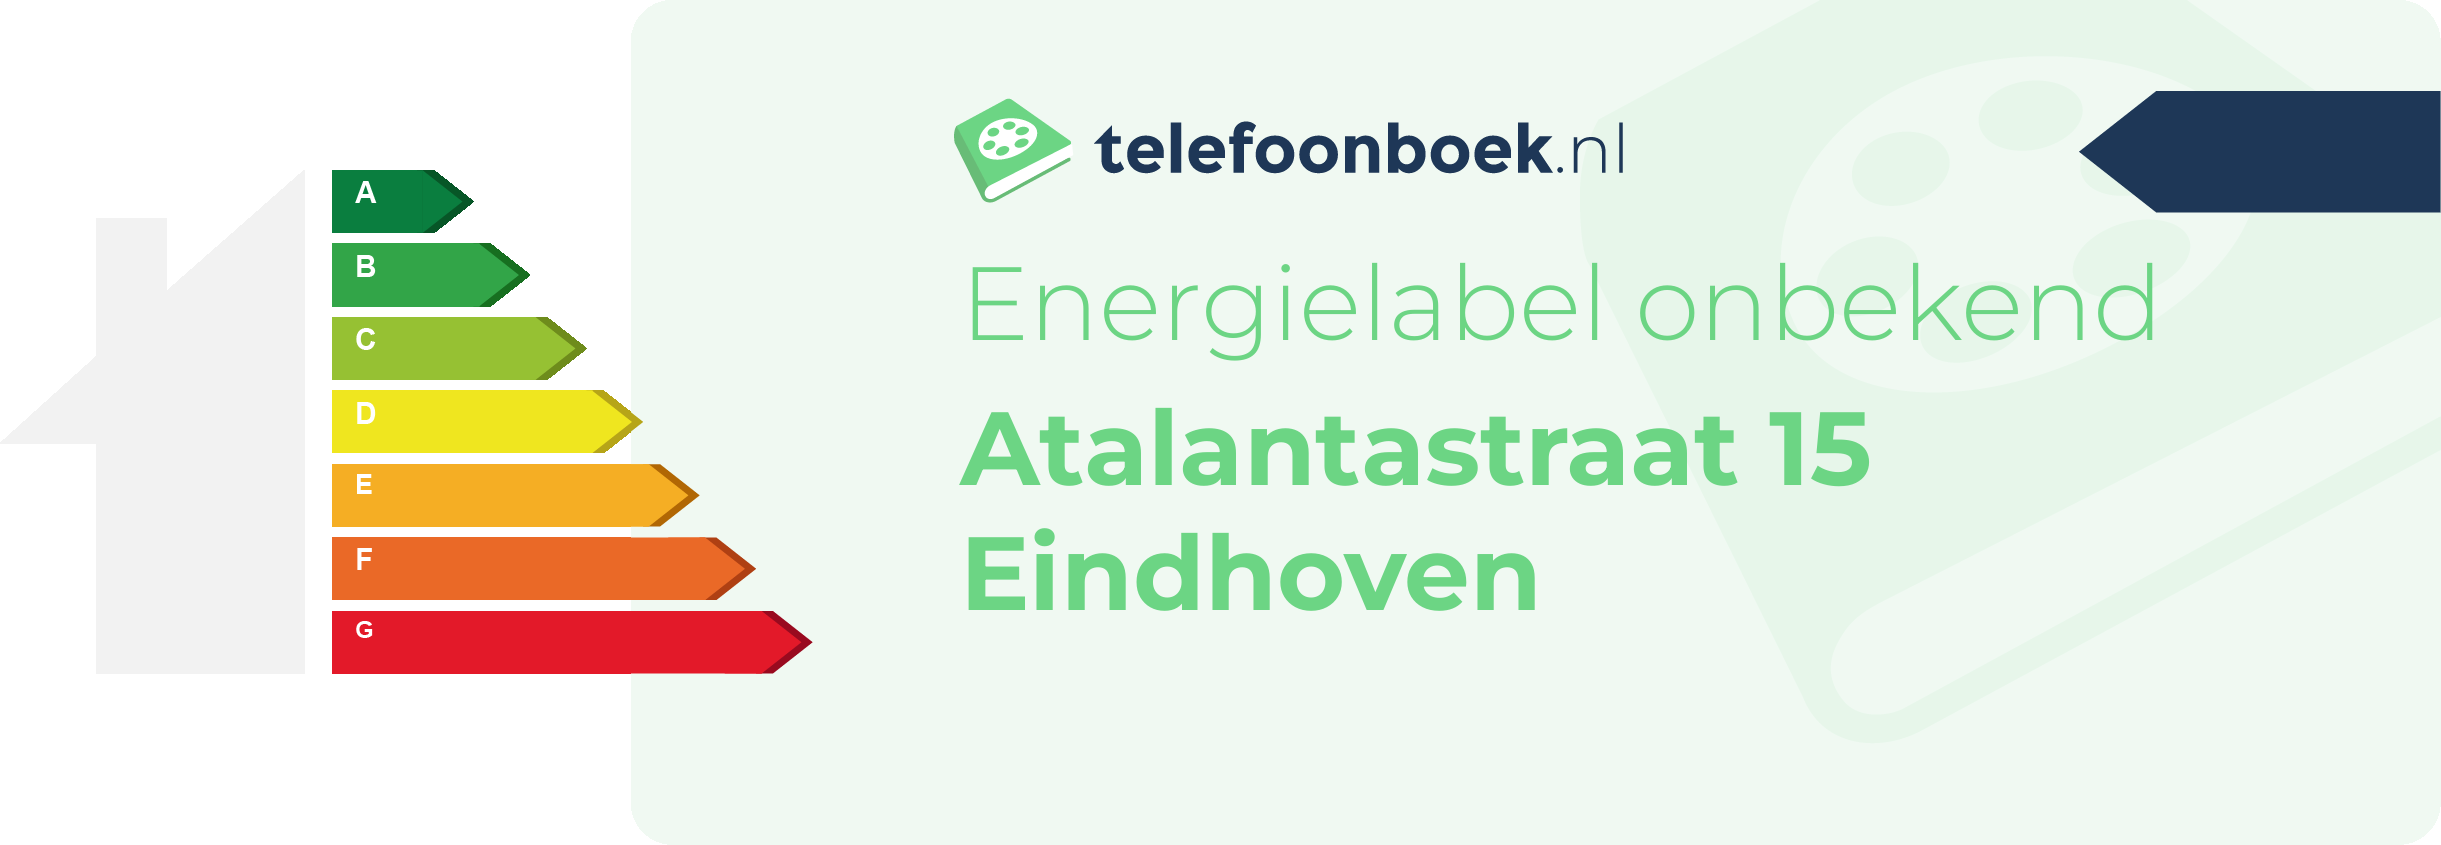 Energielabel Atalantastraat 15 Eindhoven